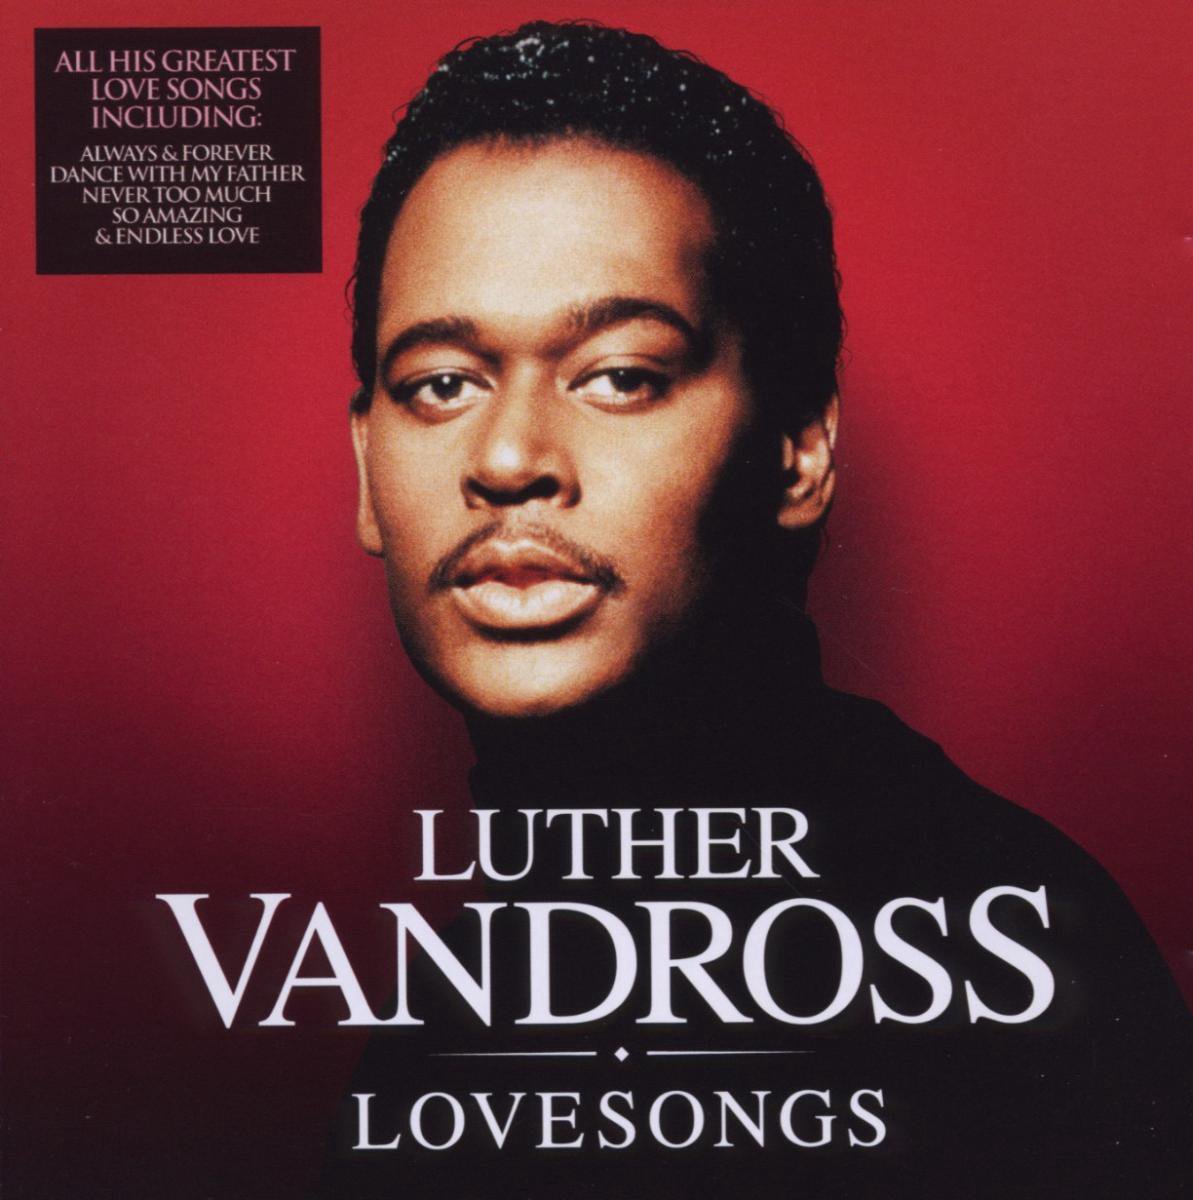 luther vandross love songs list